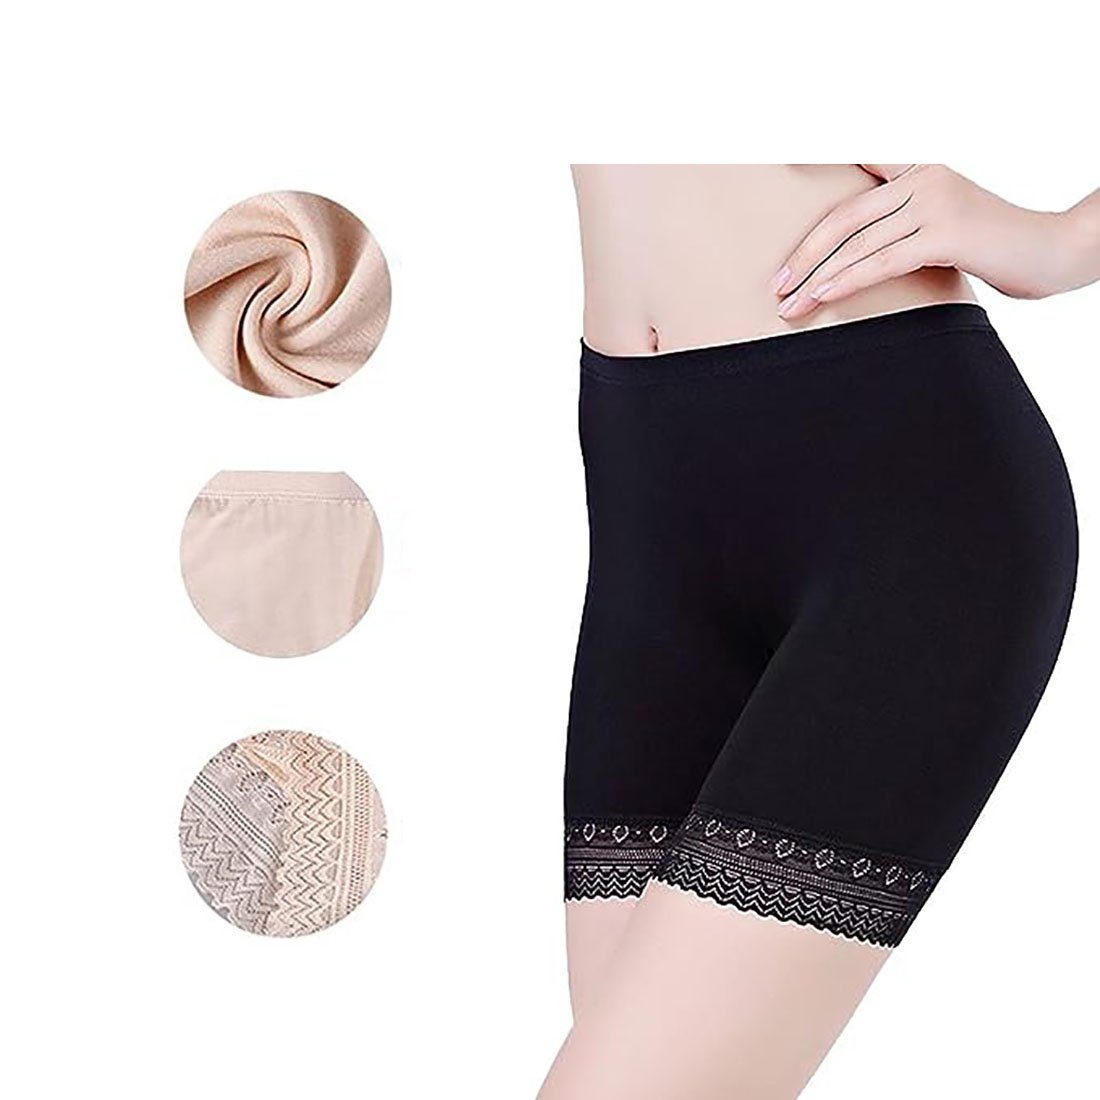 CTGtree Yogashorts 2 Stück Damen Slipshorts Mädchen Panties Unterhosen Baumwolle